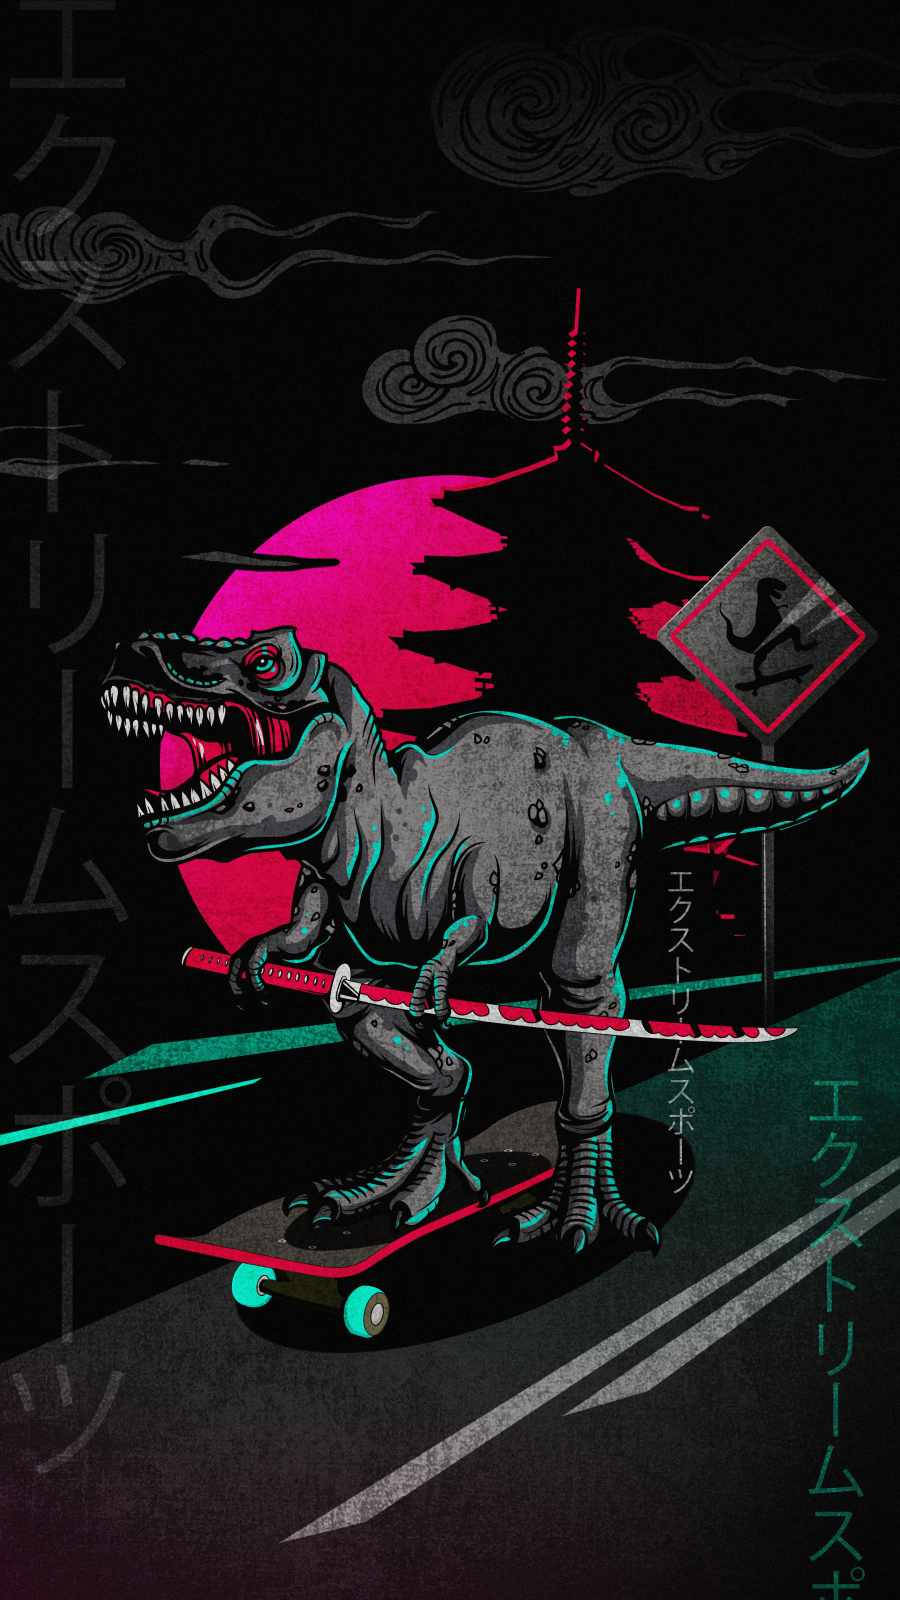 Dinosaur iPhone Wallpapers  Top Free Dinosaur iPhone Backgrounds   WallpaperAccess